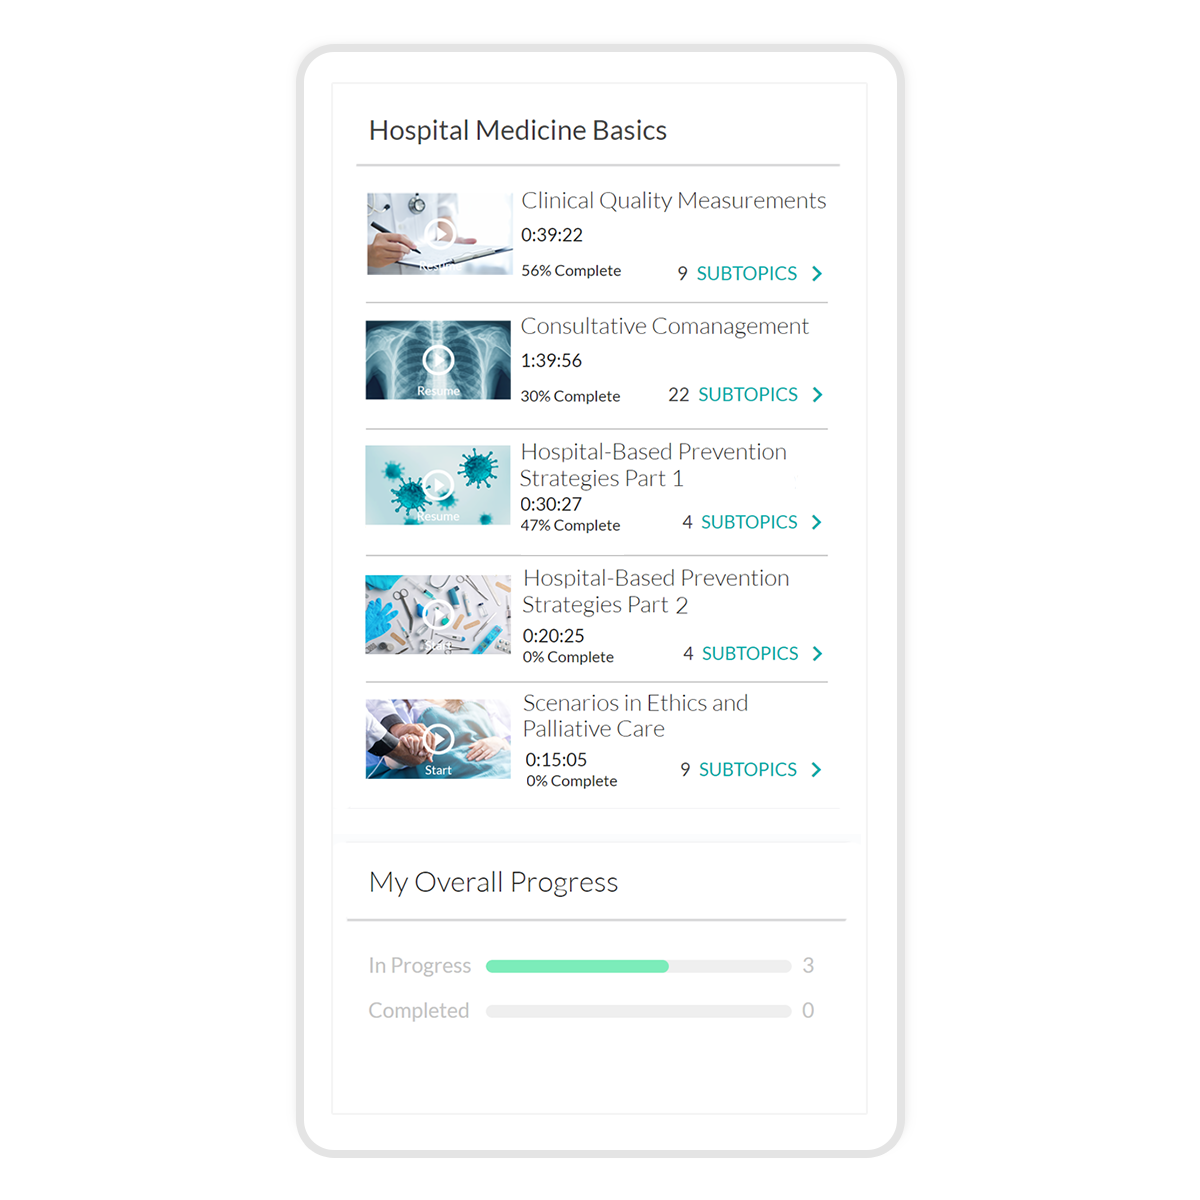 Hospital Medicine Basics topic list on a mobile device